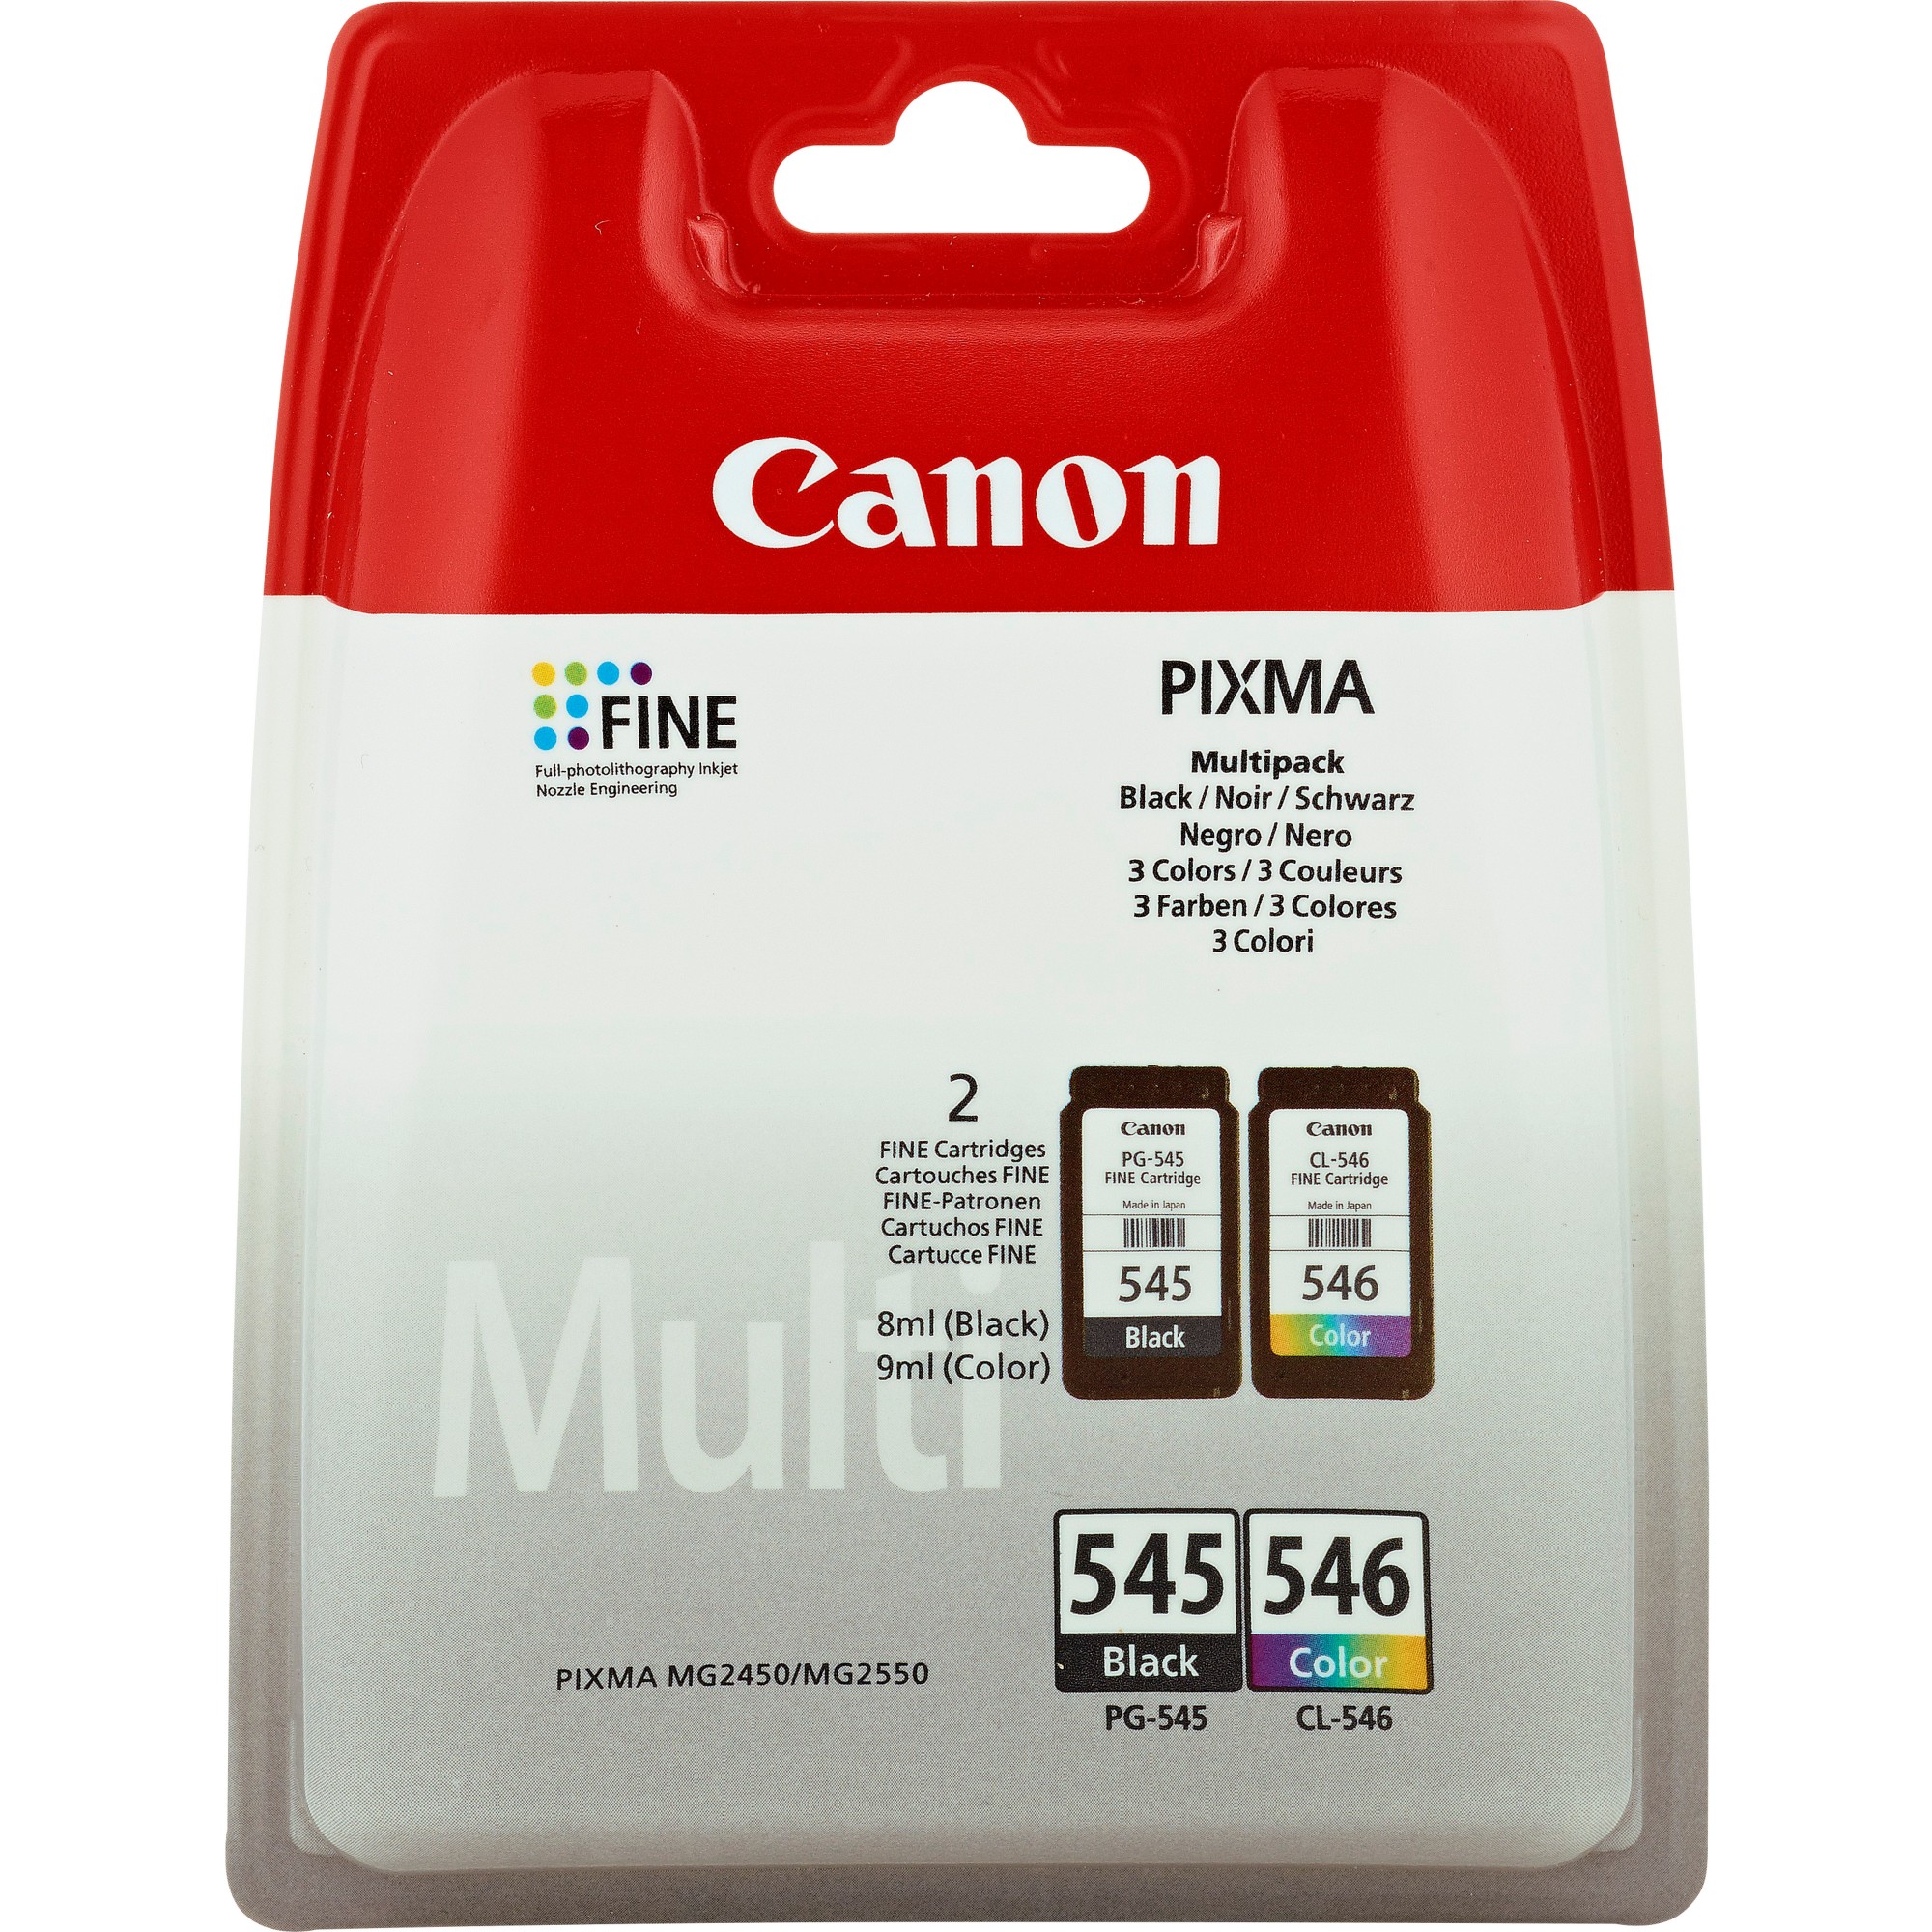 2x Cartouche Noir pour Canon Pixma MG-2940 MX-494 MG-3051 MG-2550